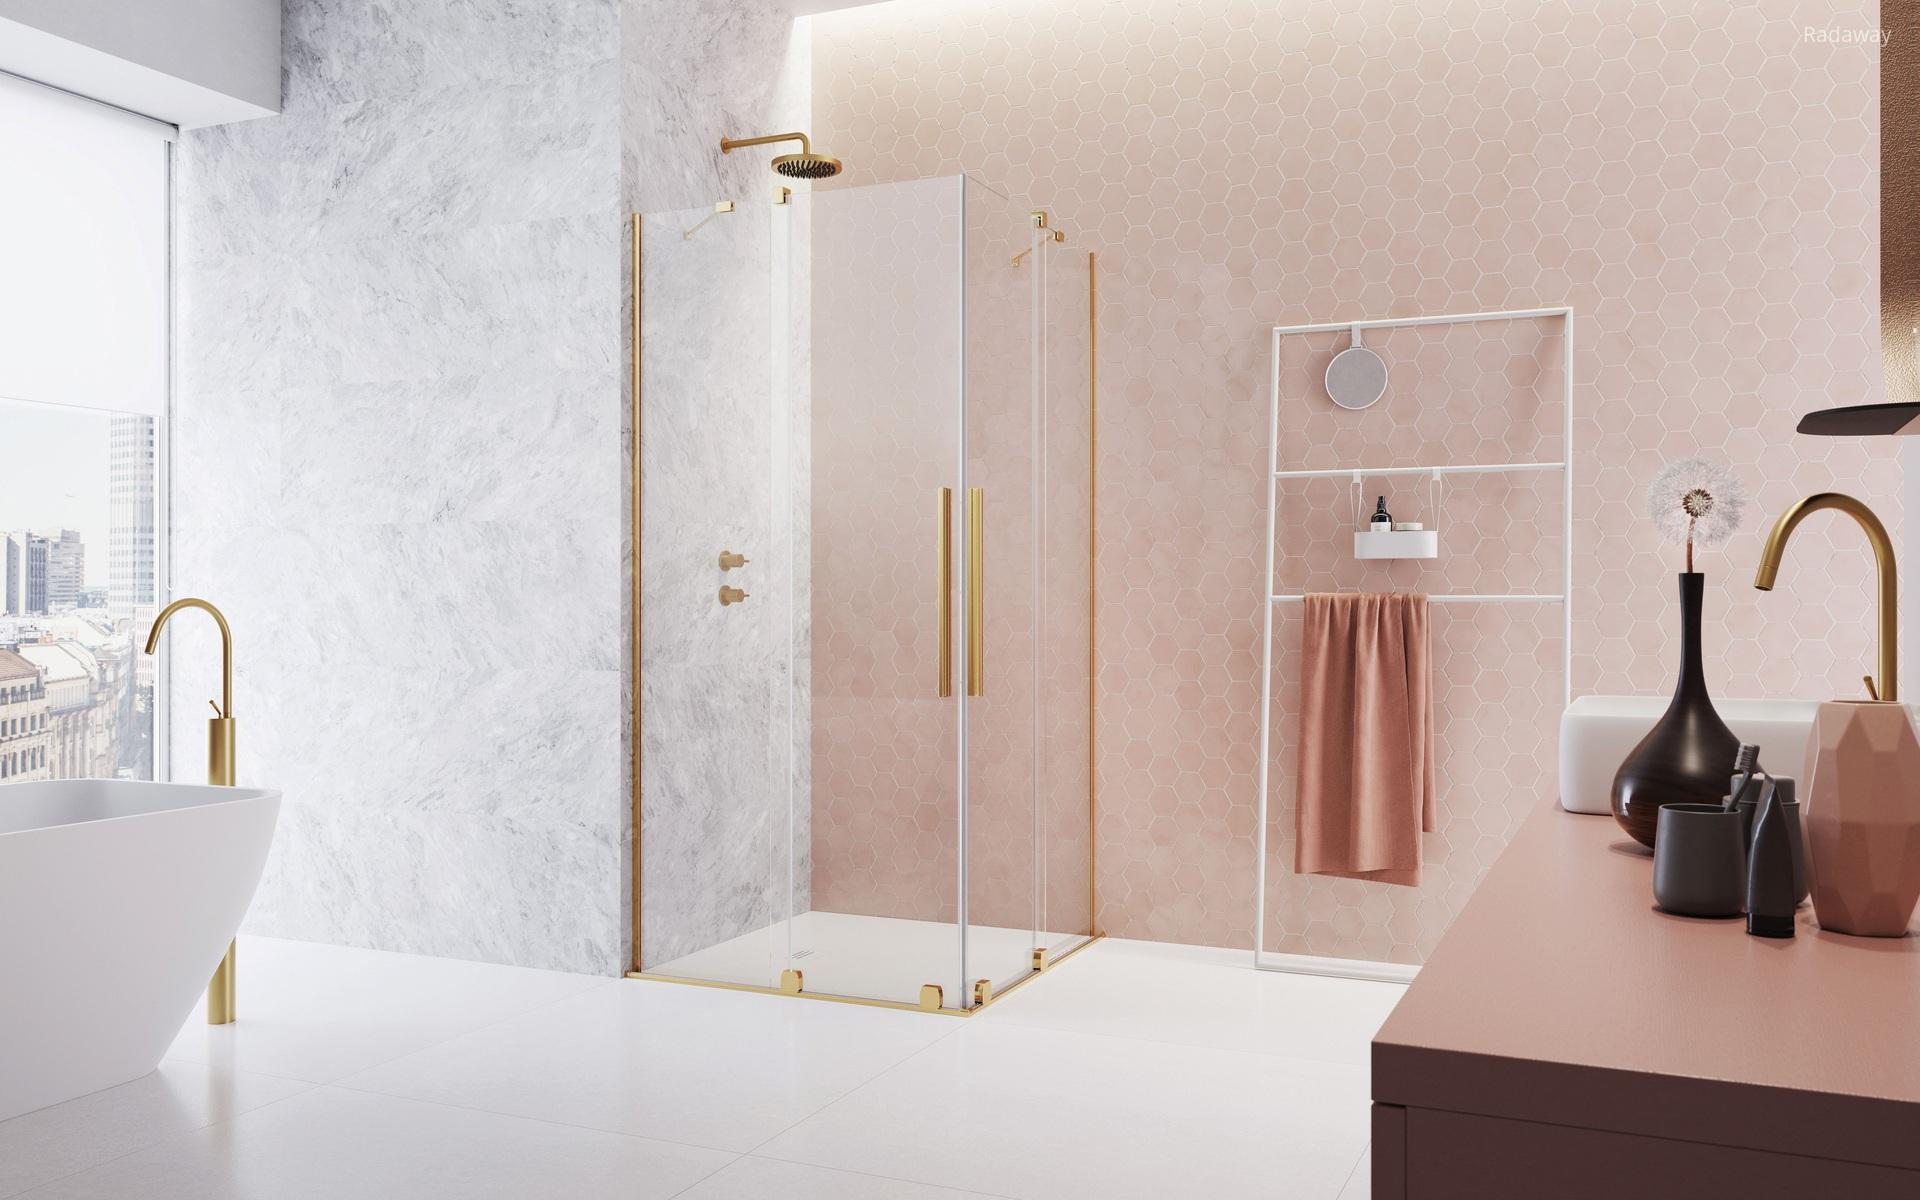 Üveg zuhanykabin - fürdő / WC ötlet, modern stílusban